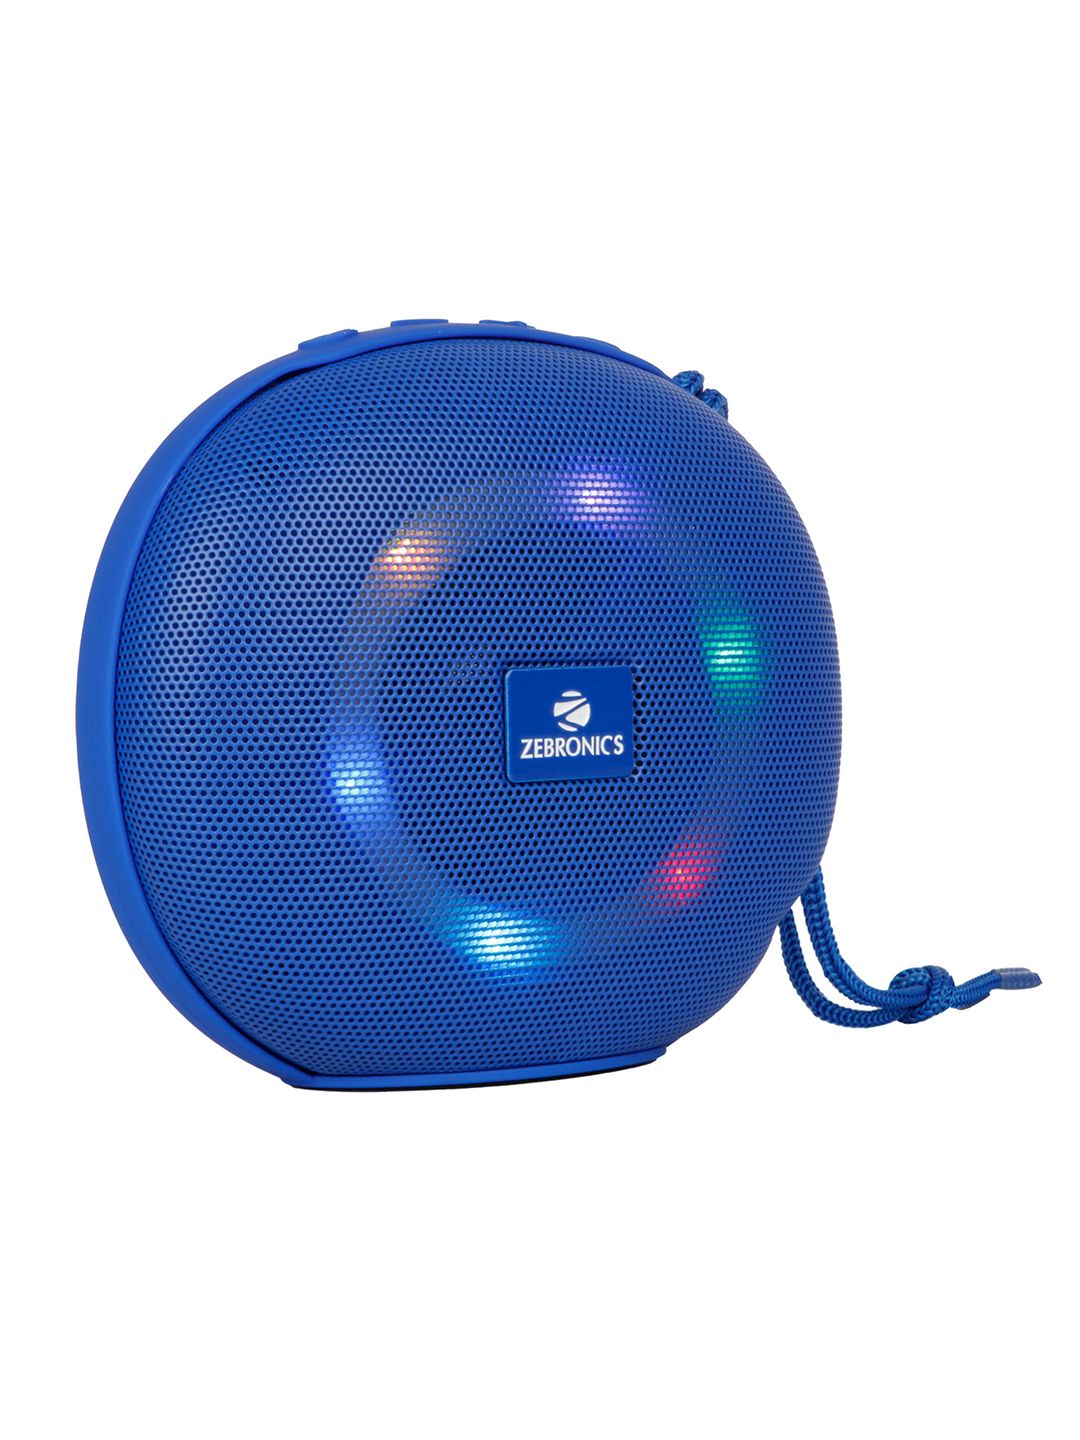 ZEBRONICS Zeb-Delight 10 Wireless Bluetooth v5.0 Portable Speaker - Blue Price in India